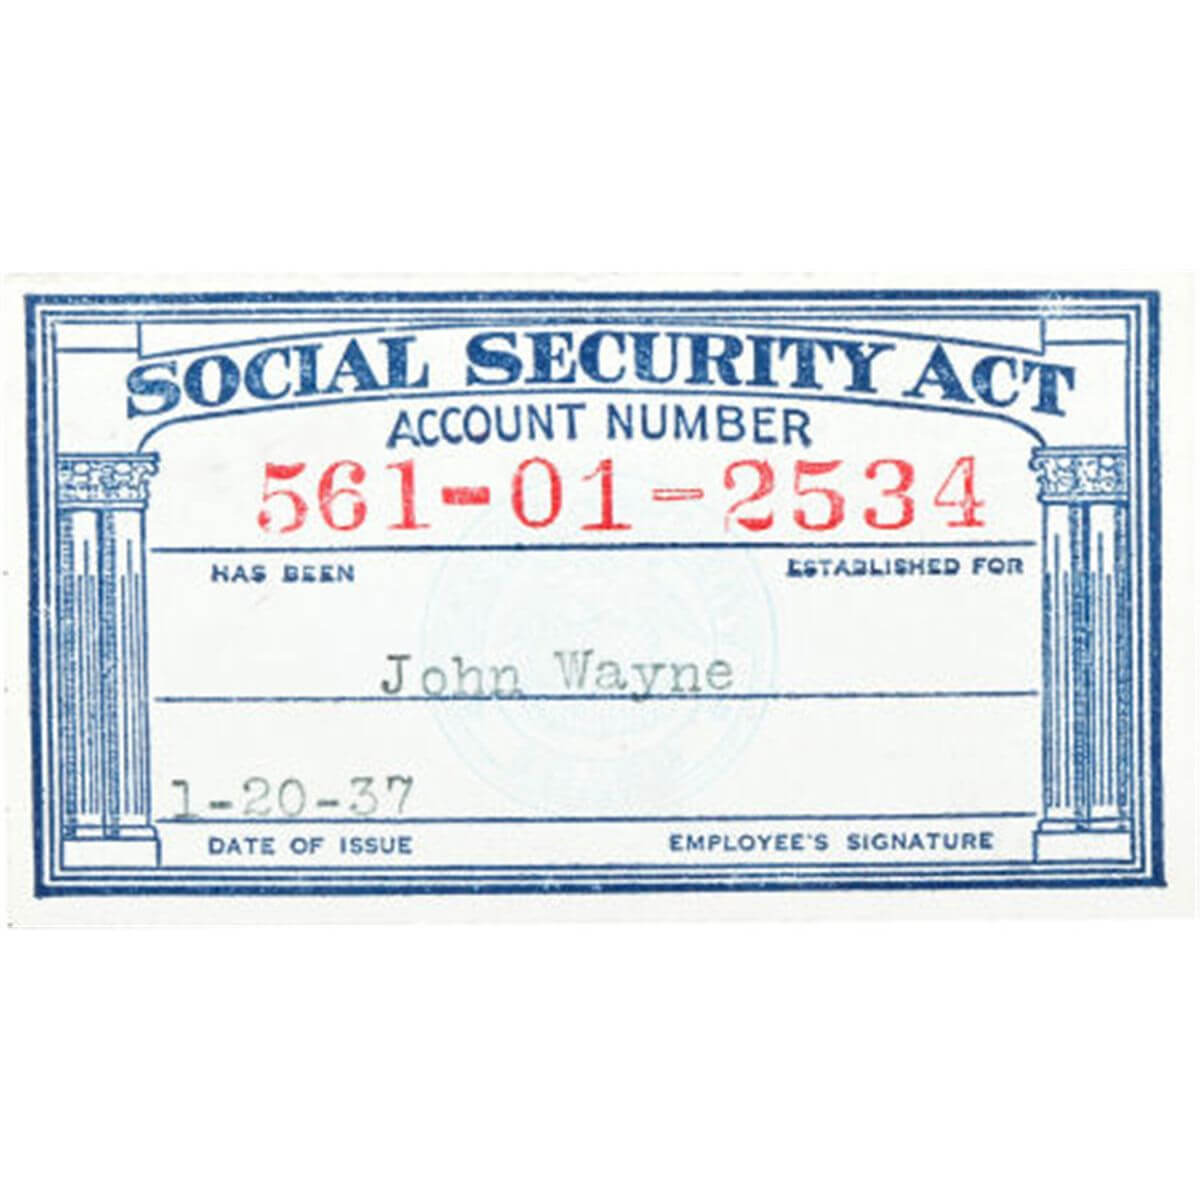 Social Security Card Templates. Social Security Template In Blank Social Security Card Template